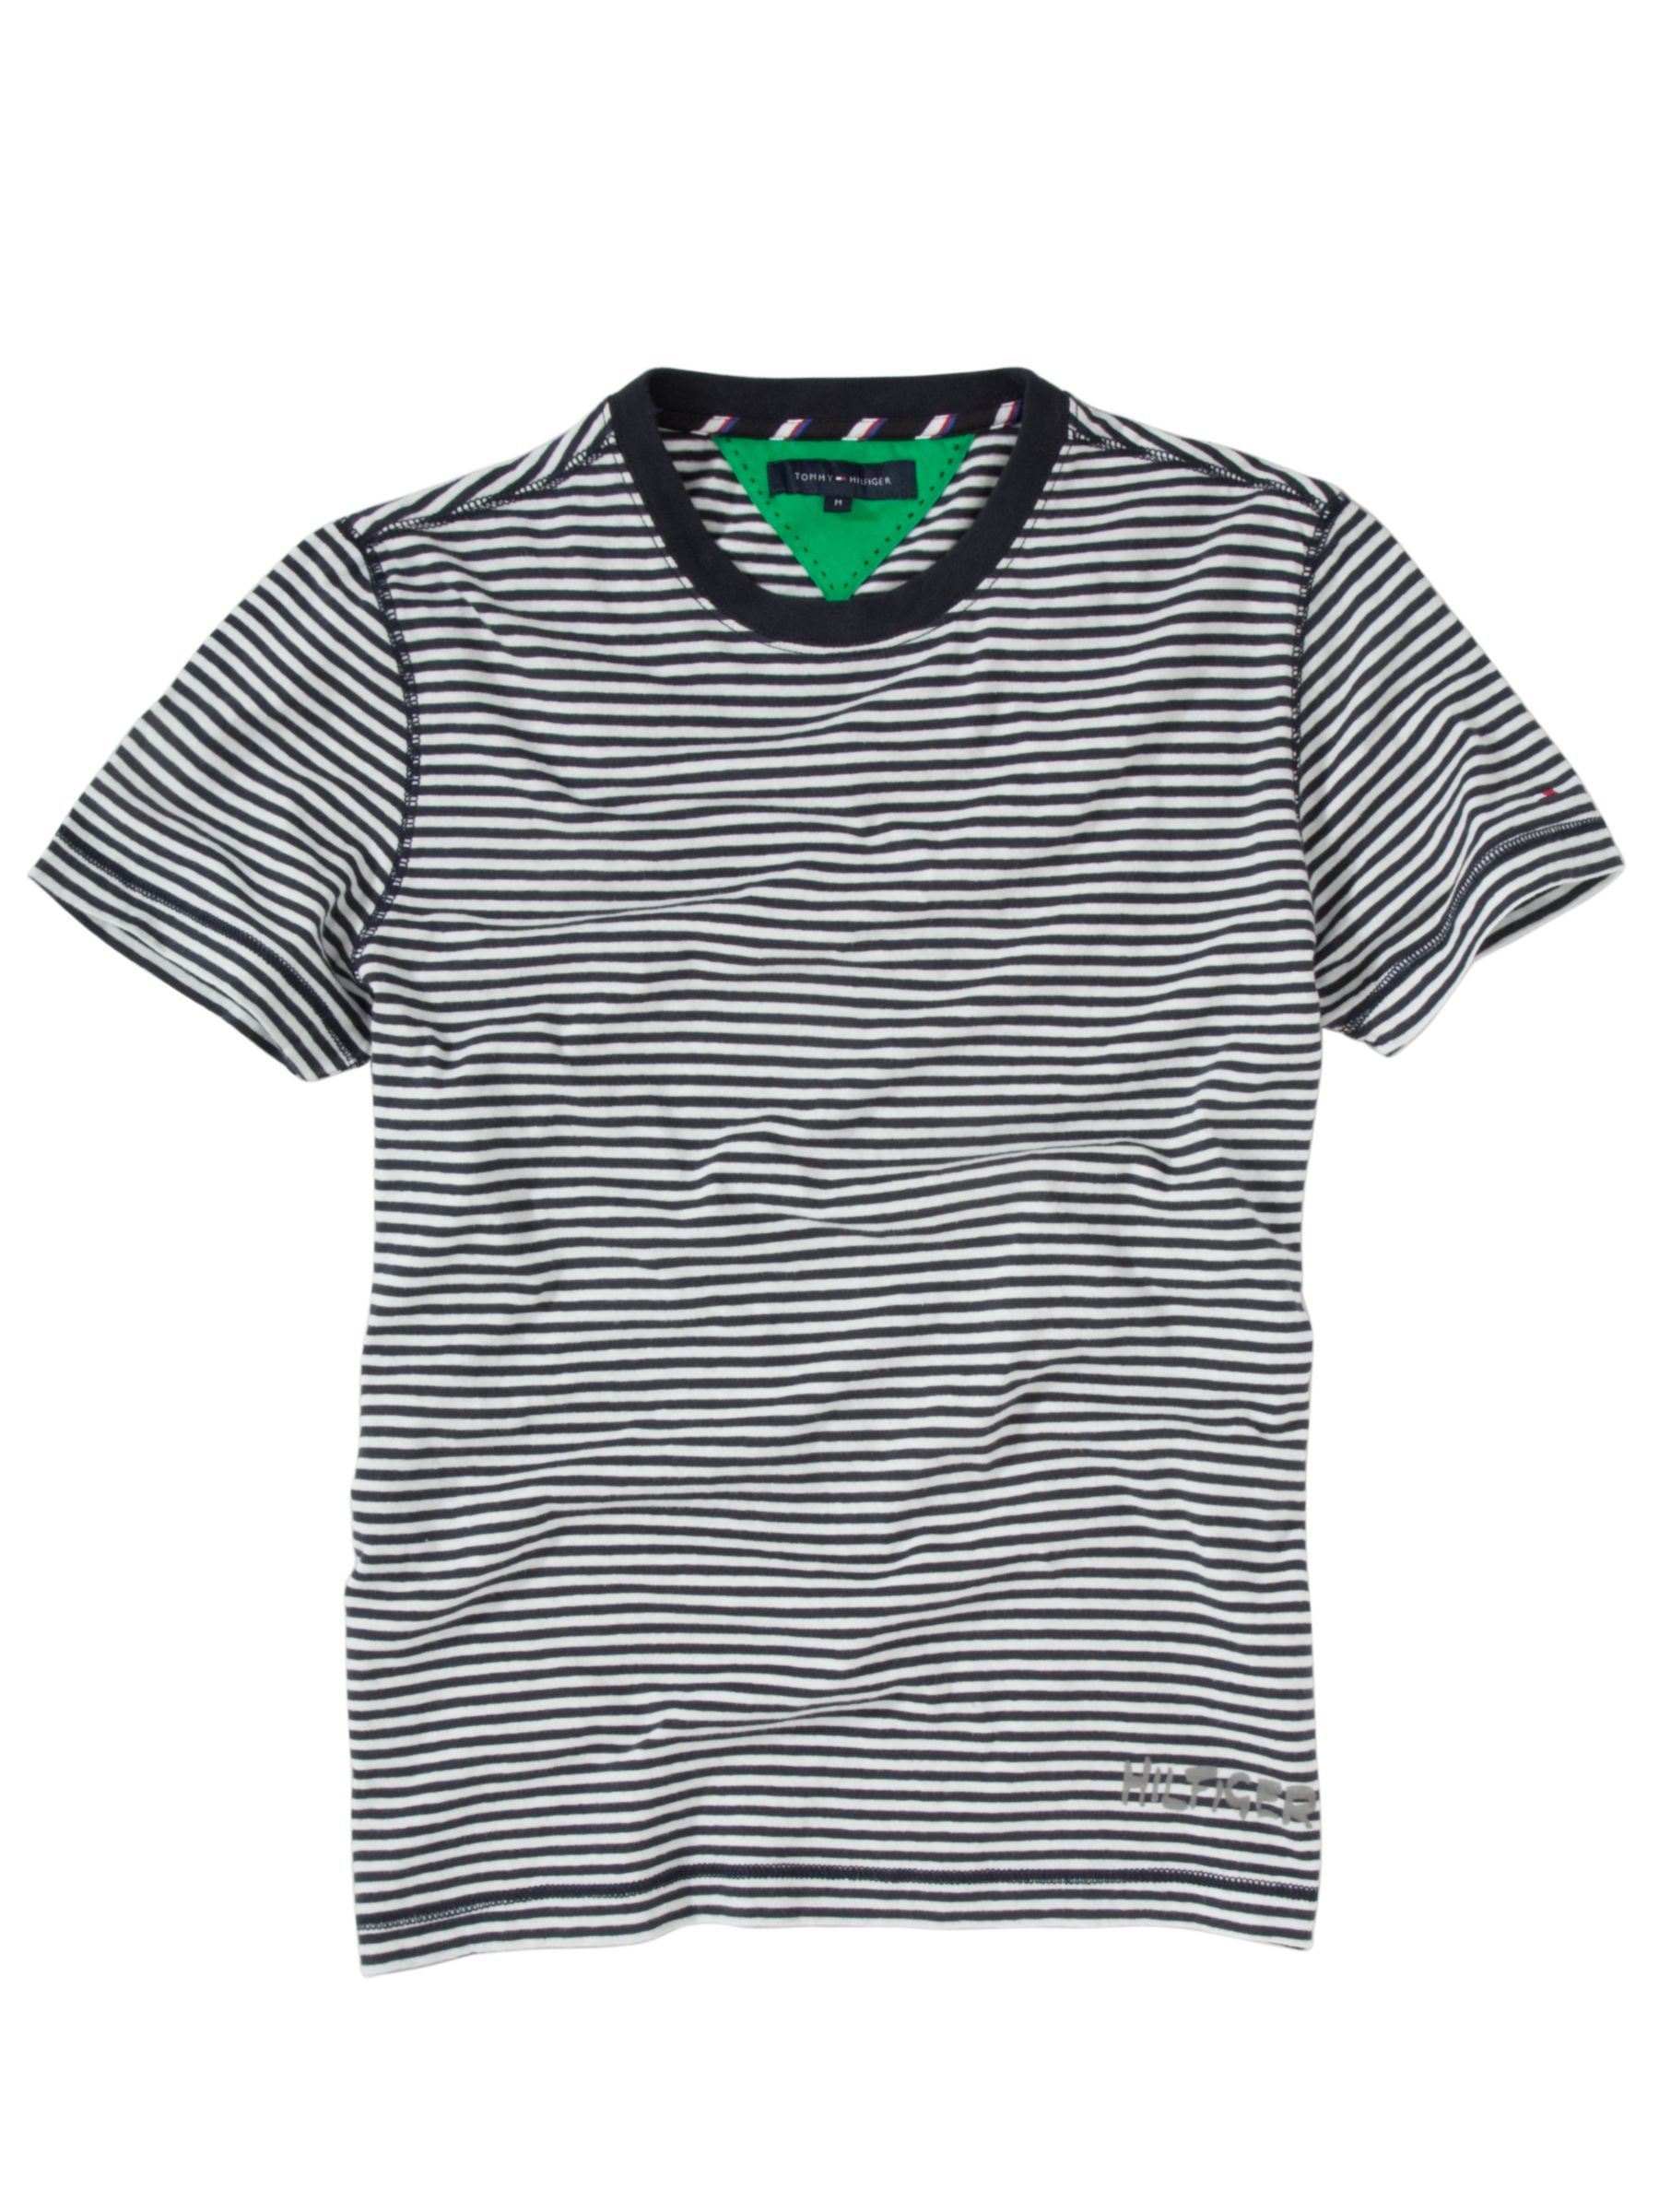 Thin Stripe T-Shirt, Navy